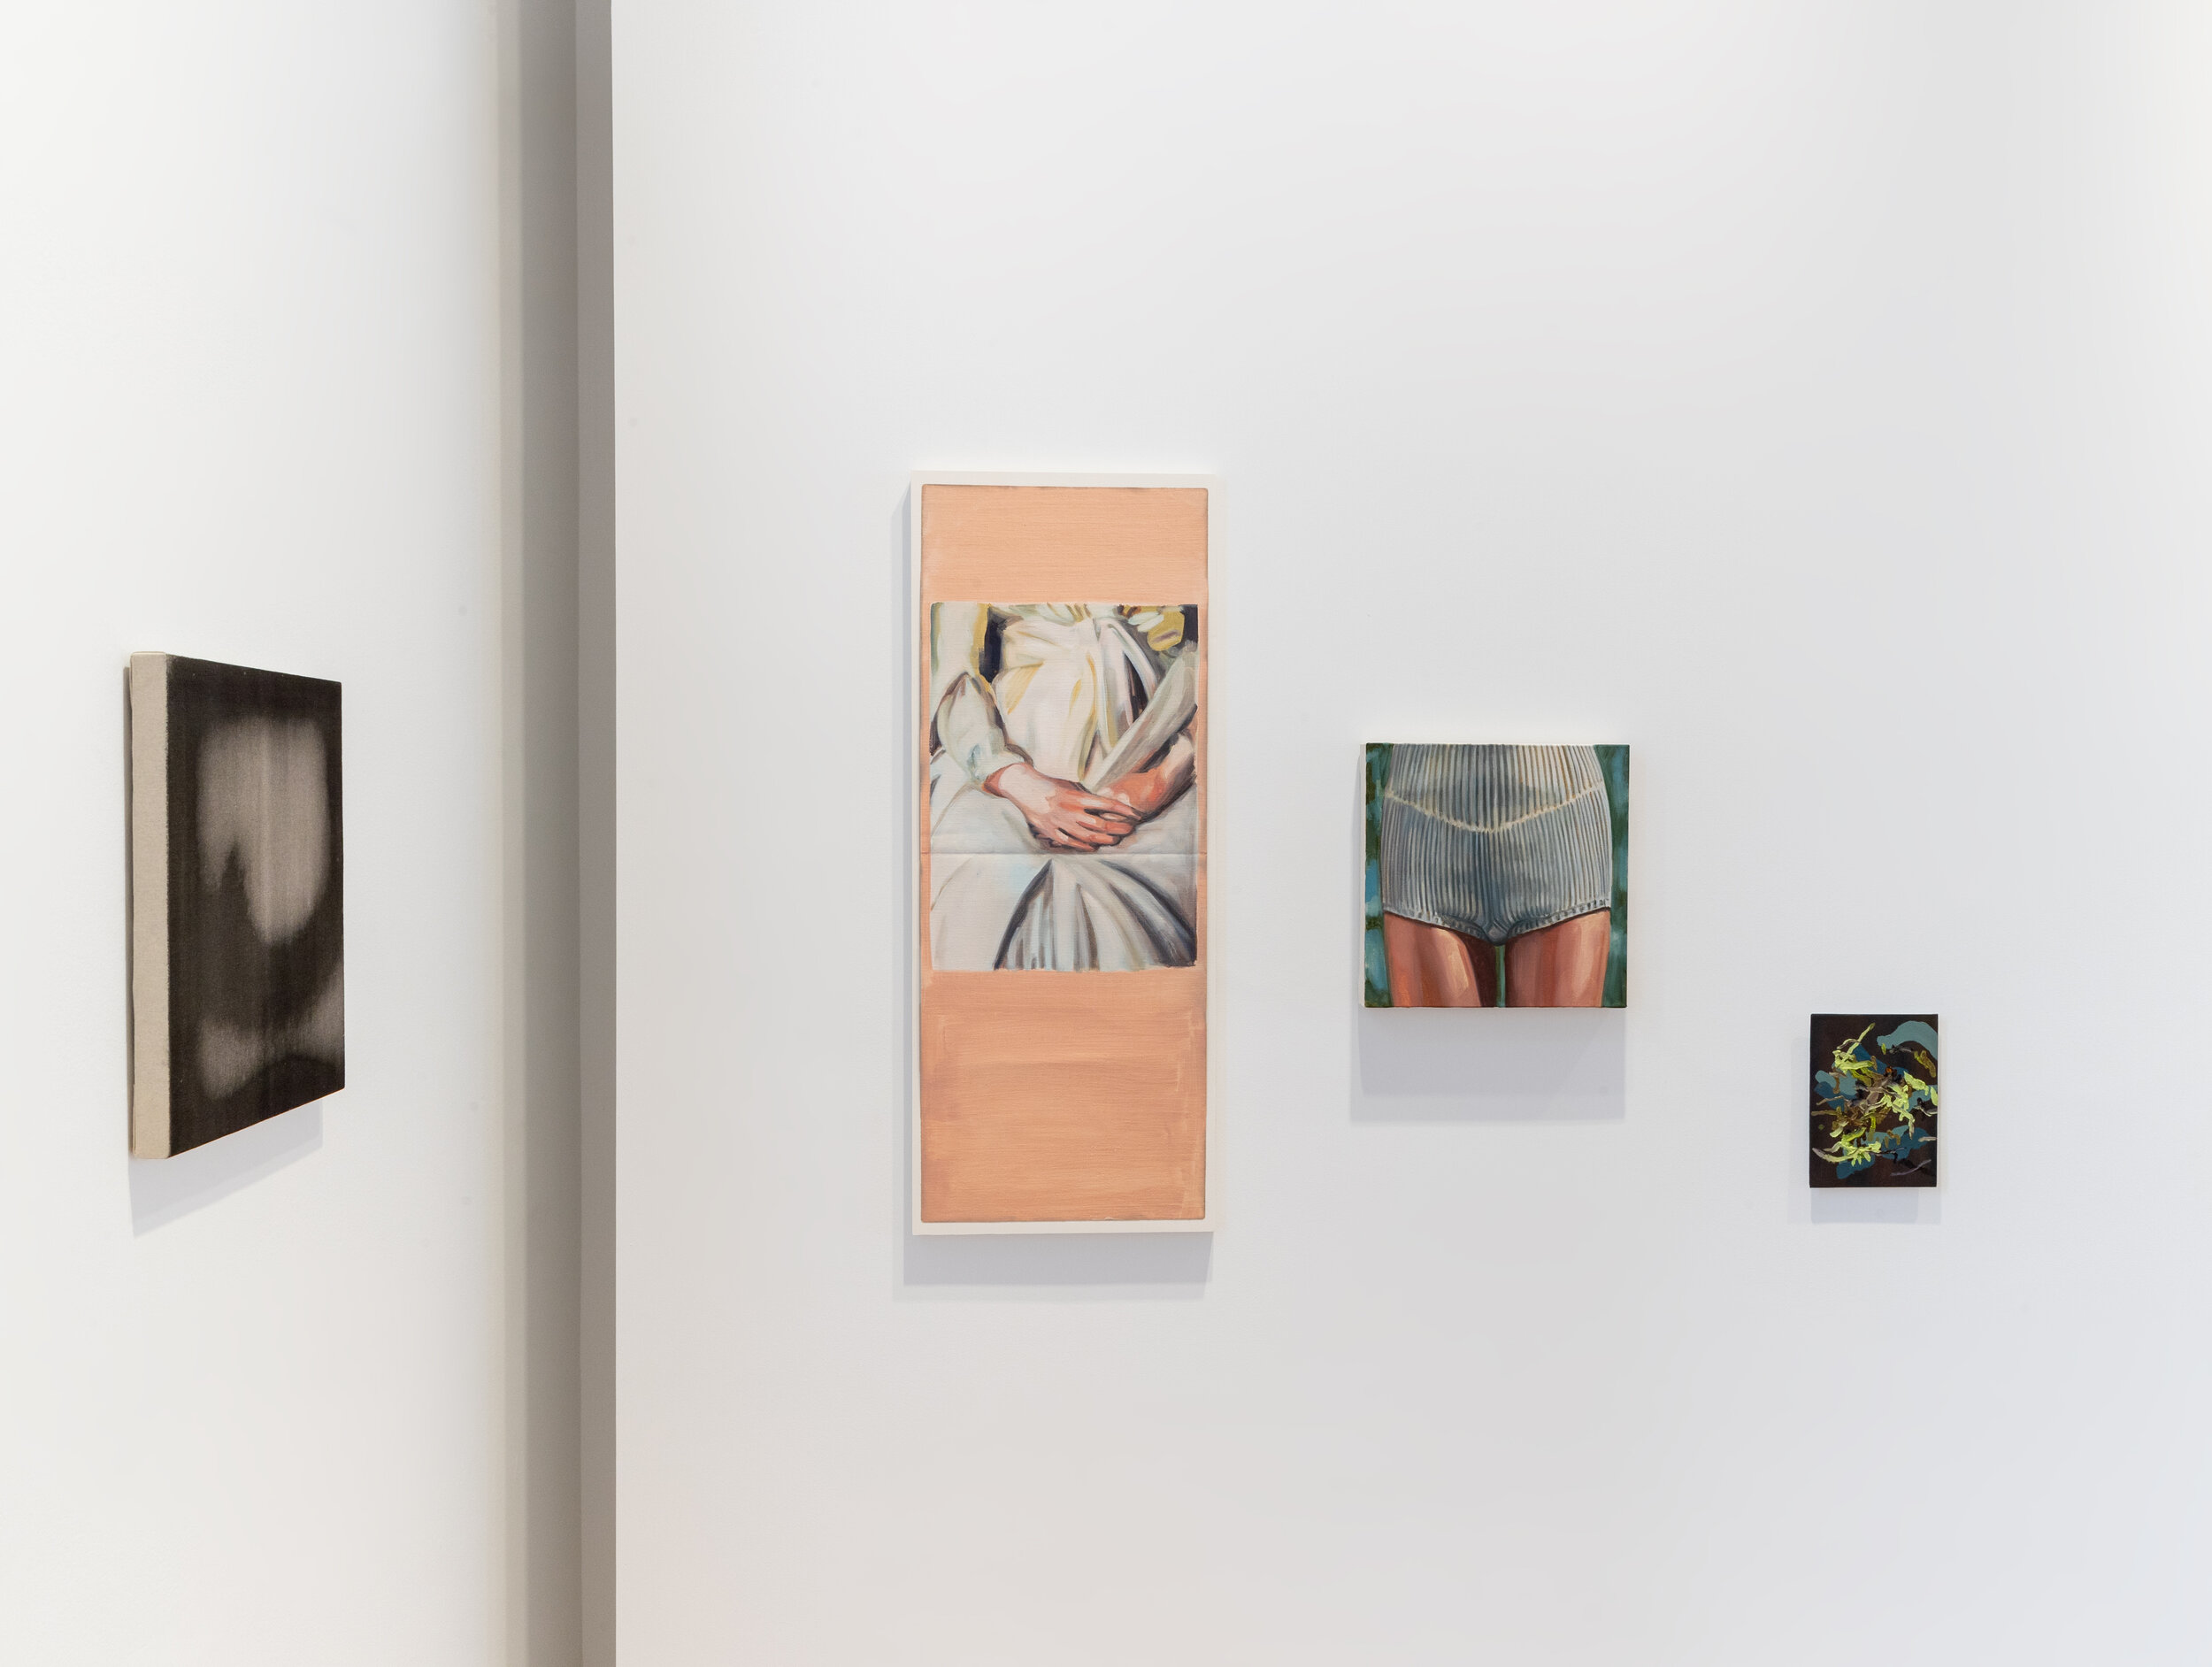  Installation View  [LR]: Yuichiro Kikuma, Variations III no. 10; 2020; Bárbara Alegre, Embrace, 2020; Landscape, 2020; Alice Kemp, Leaves and their Shadows, 2020. 